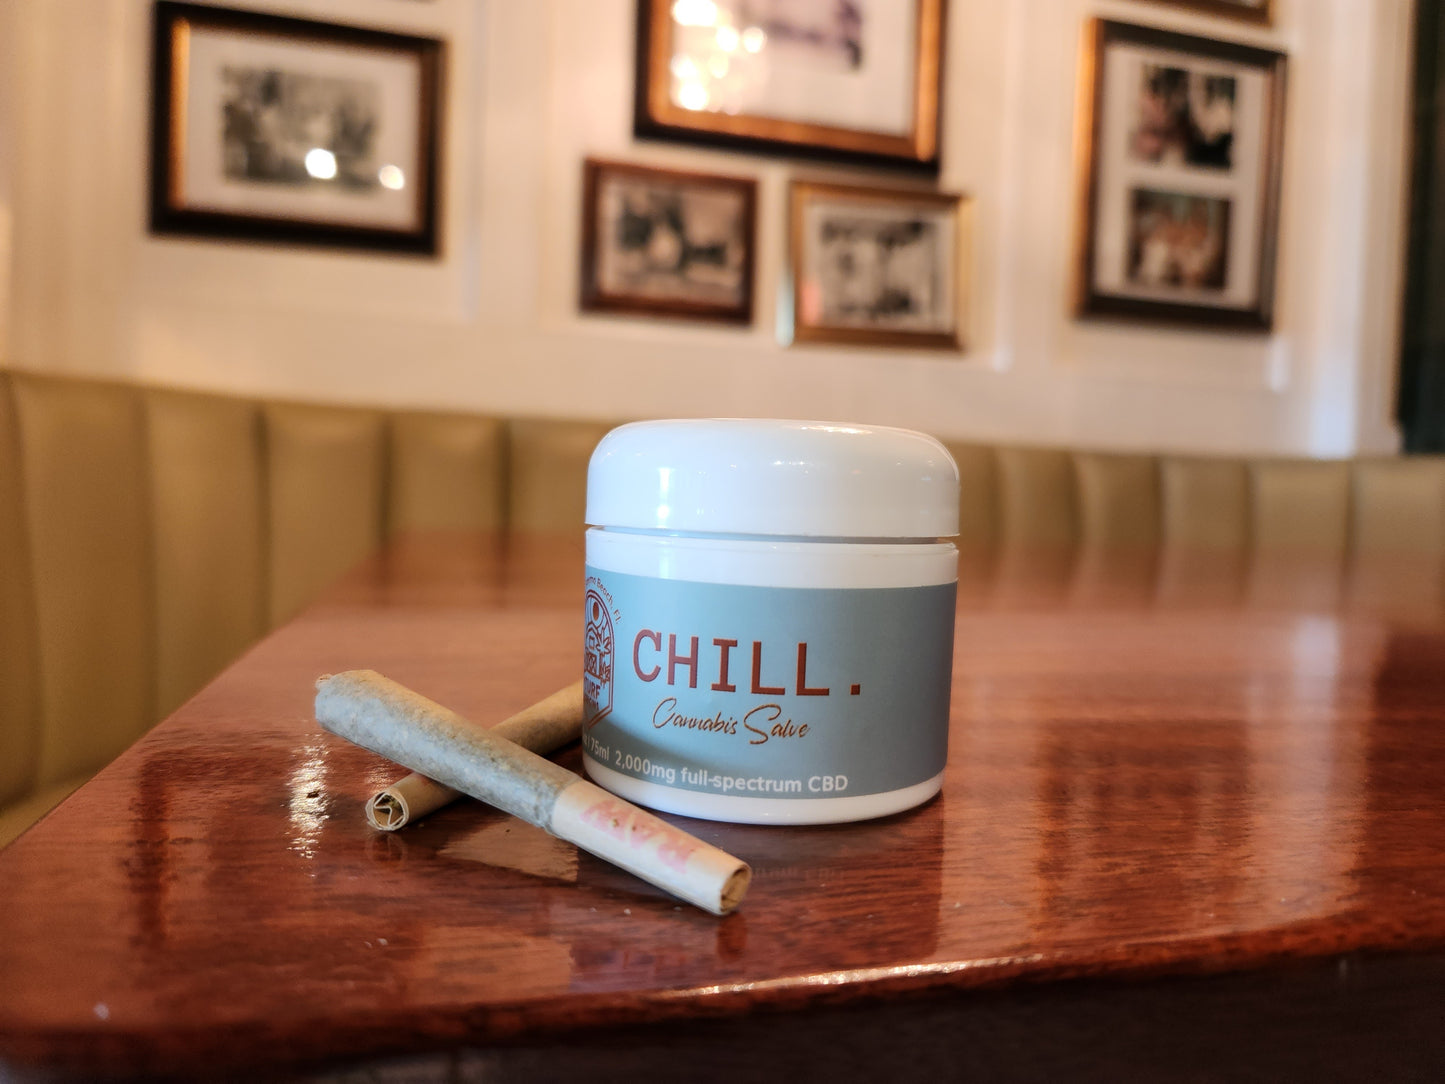 CHILL. 2,000mg Cannabis Salve